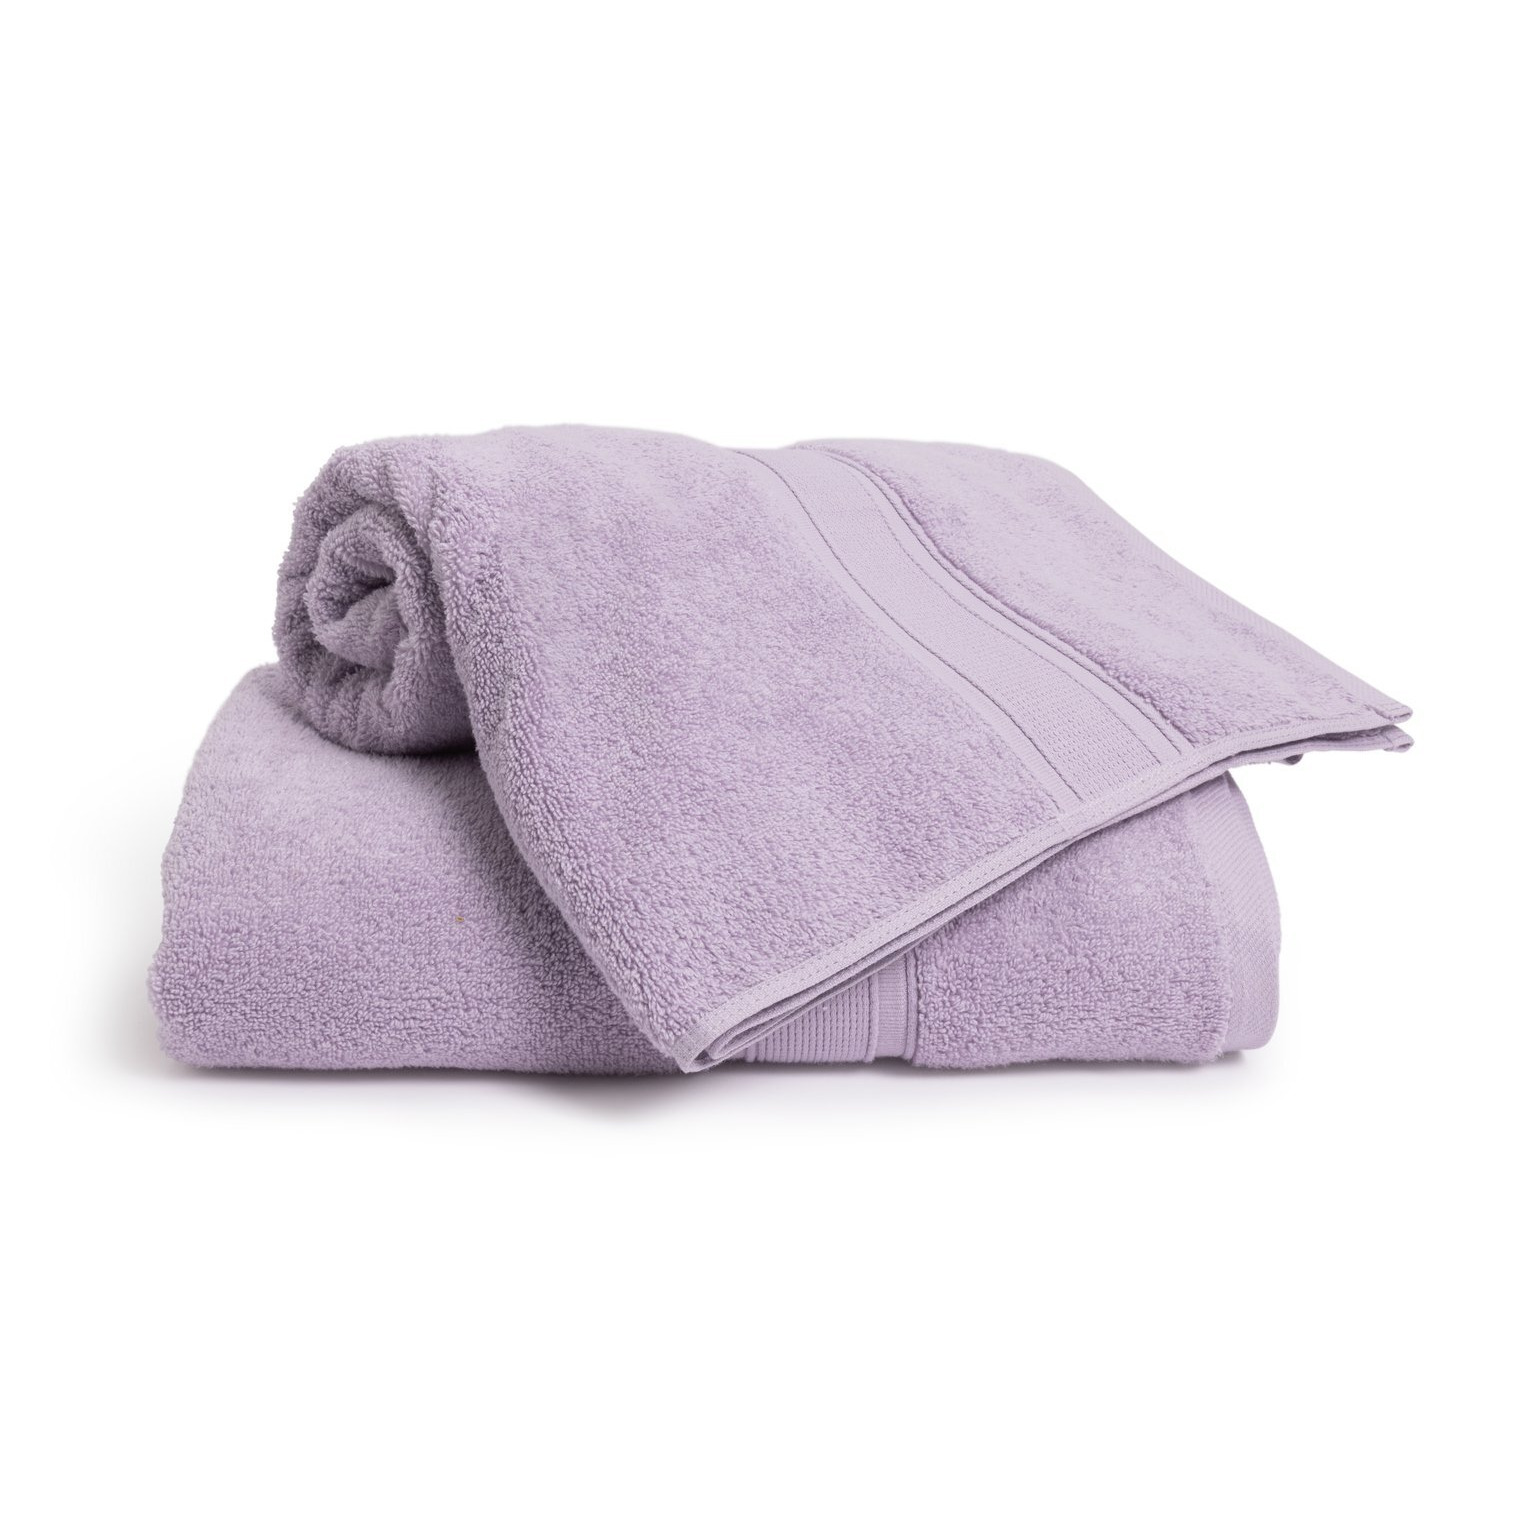 Habitat Cotton Supersoft 2 Pack Hand Towel - Lilac - image 1